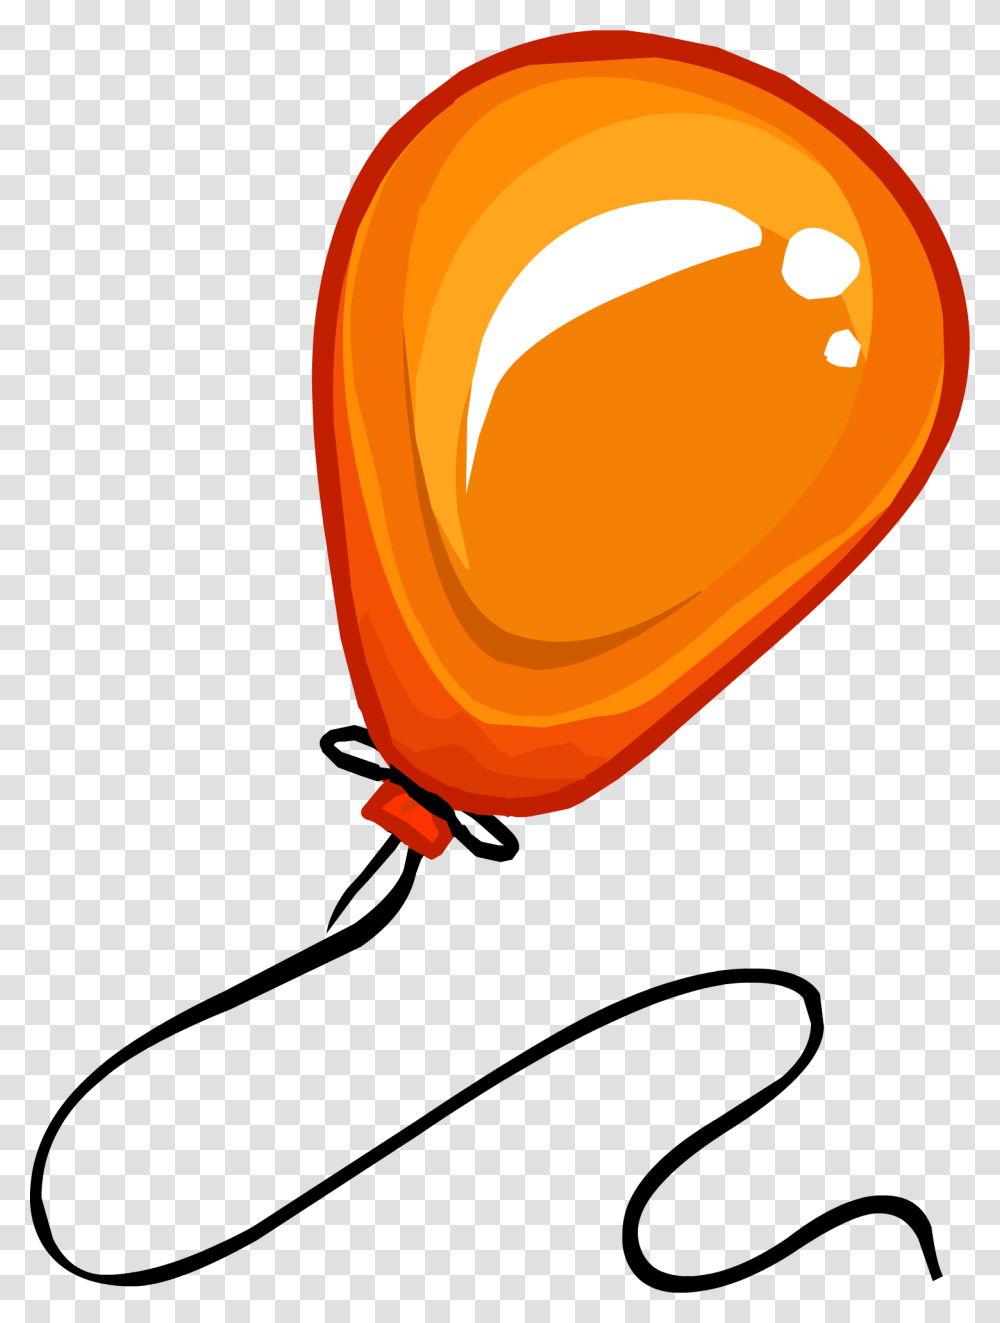 Official Club Penguin Online Wiki Orange Balloon, Plant, Produce, Food, Grain Transparent Png